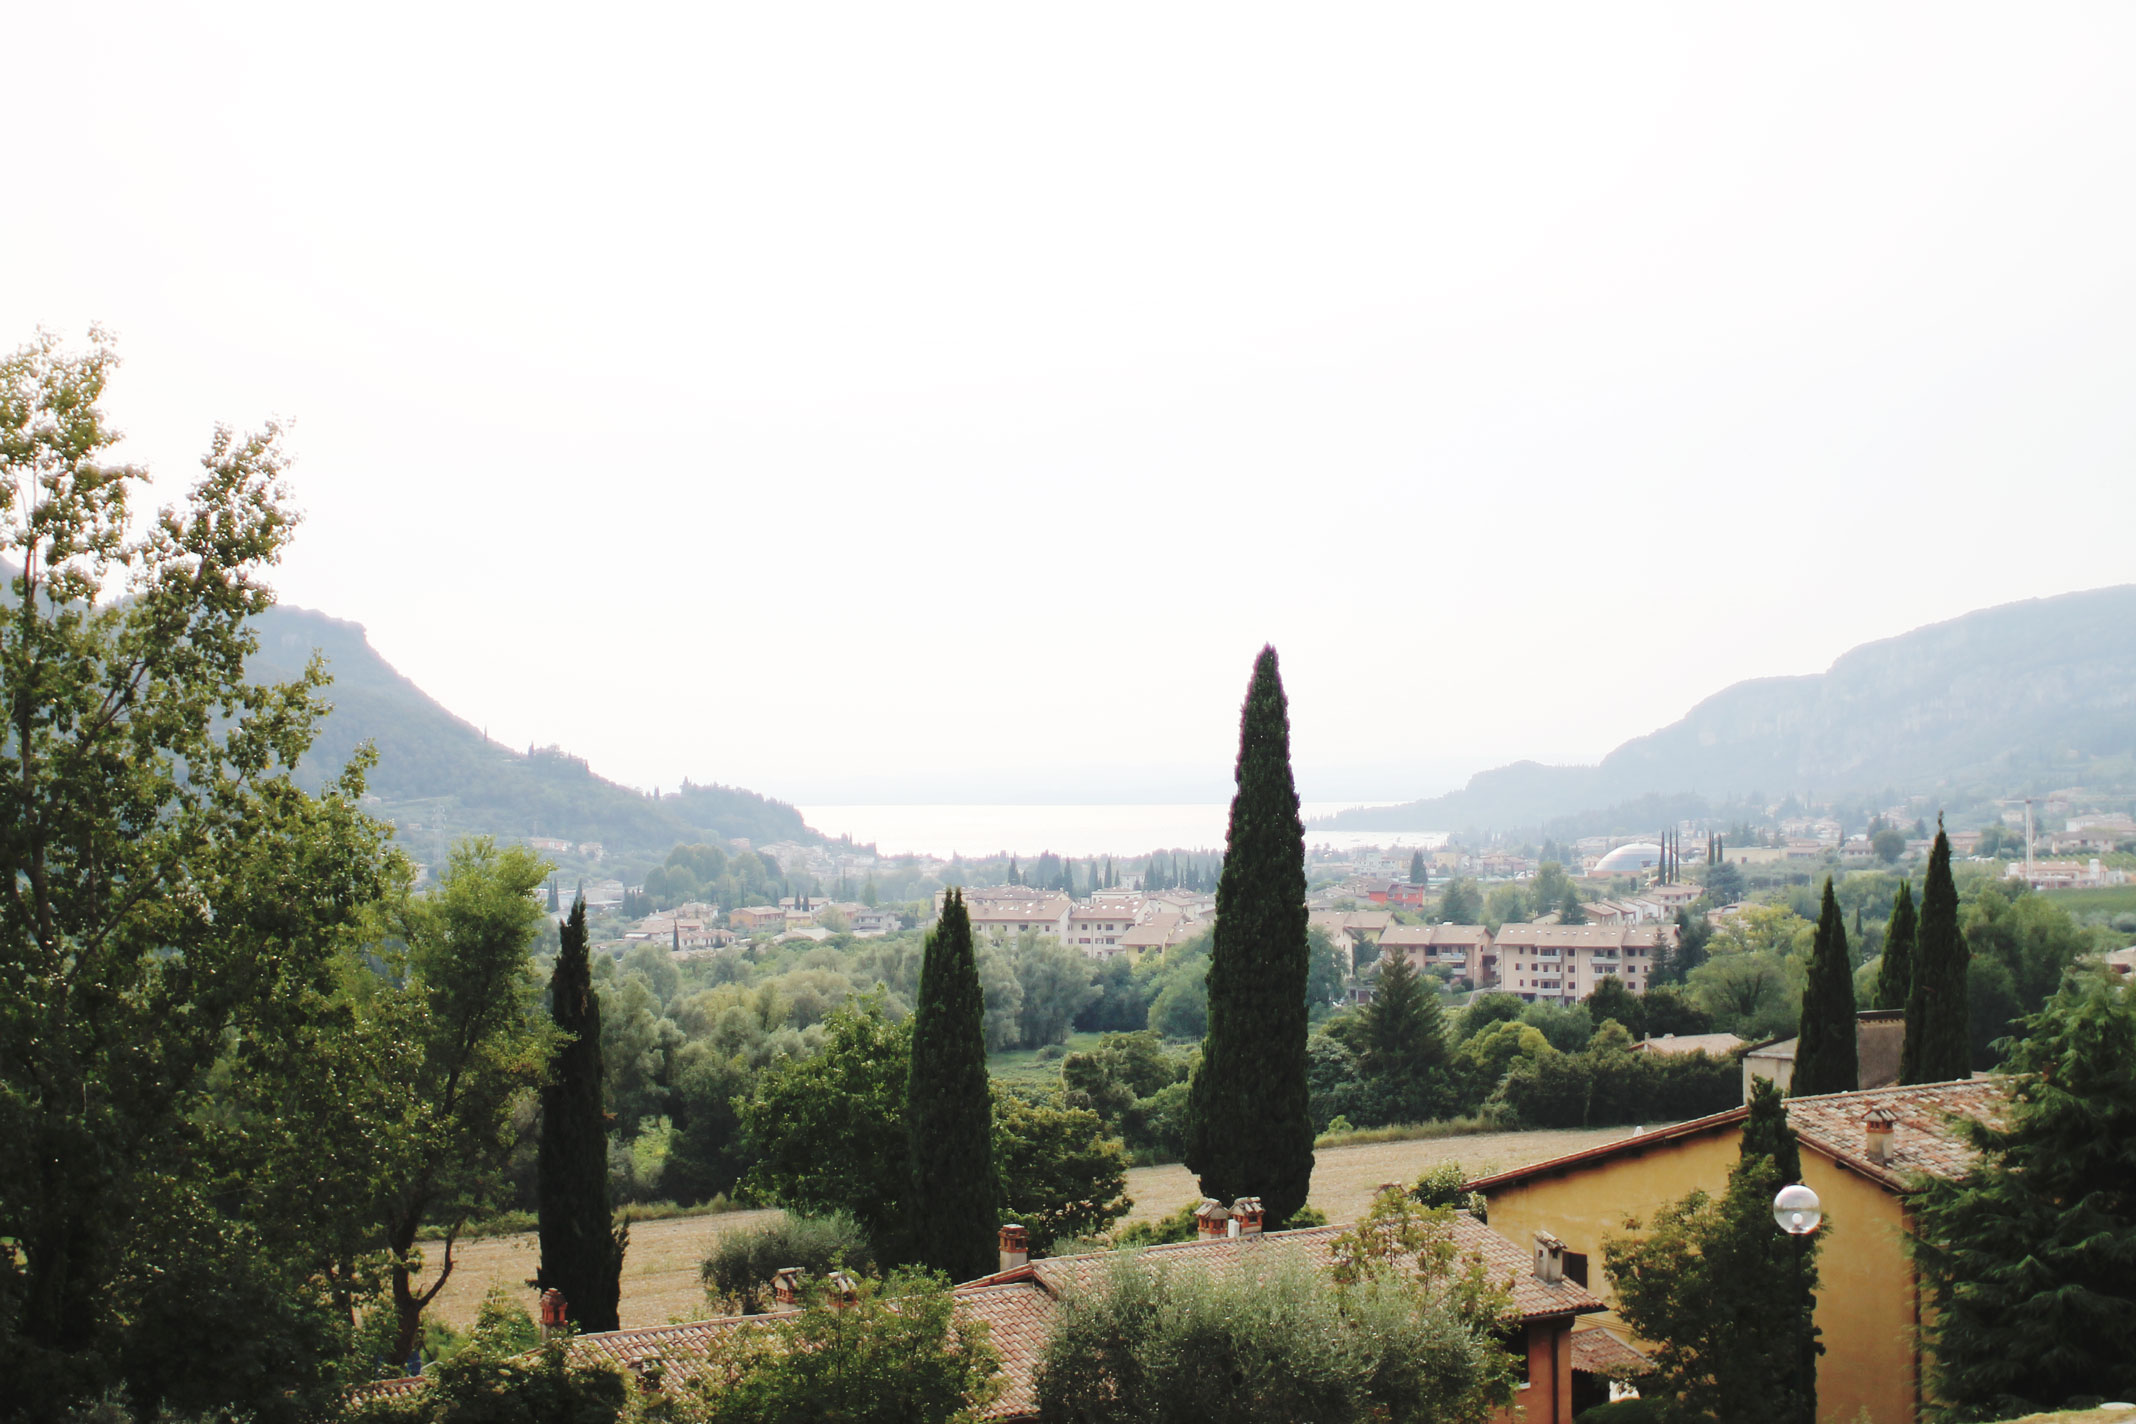 Styleat30 Travel Blog - Poiano Resort Hotel Review - Lake Garda Holiday - Italy Travel Guide 02